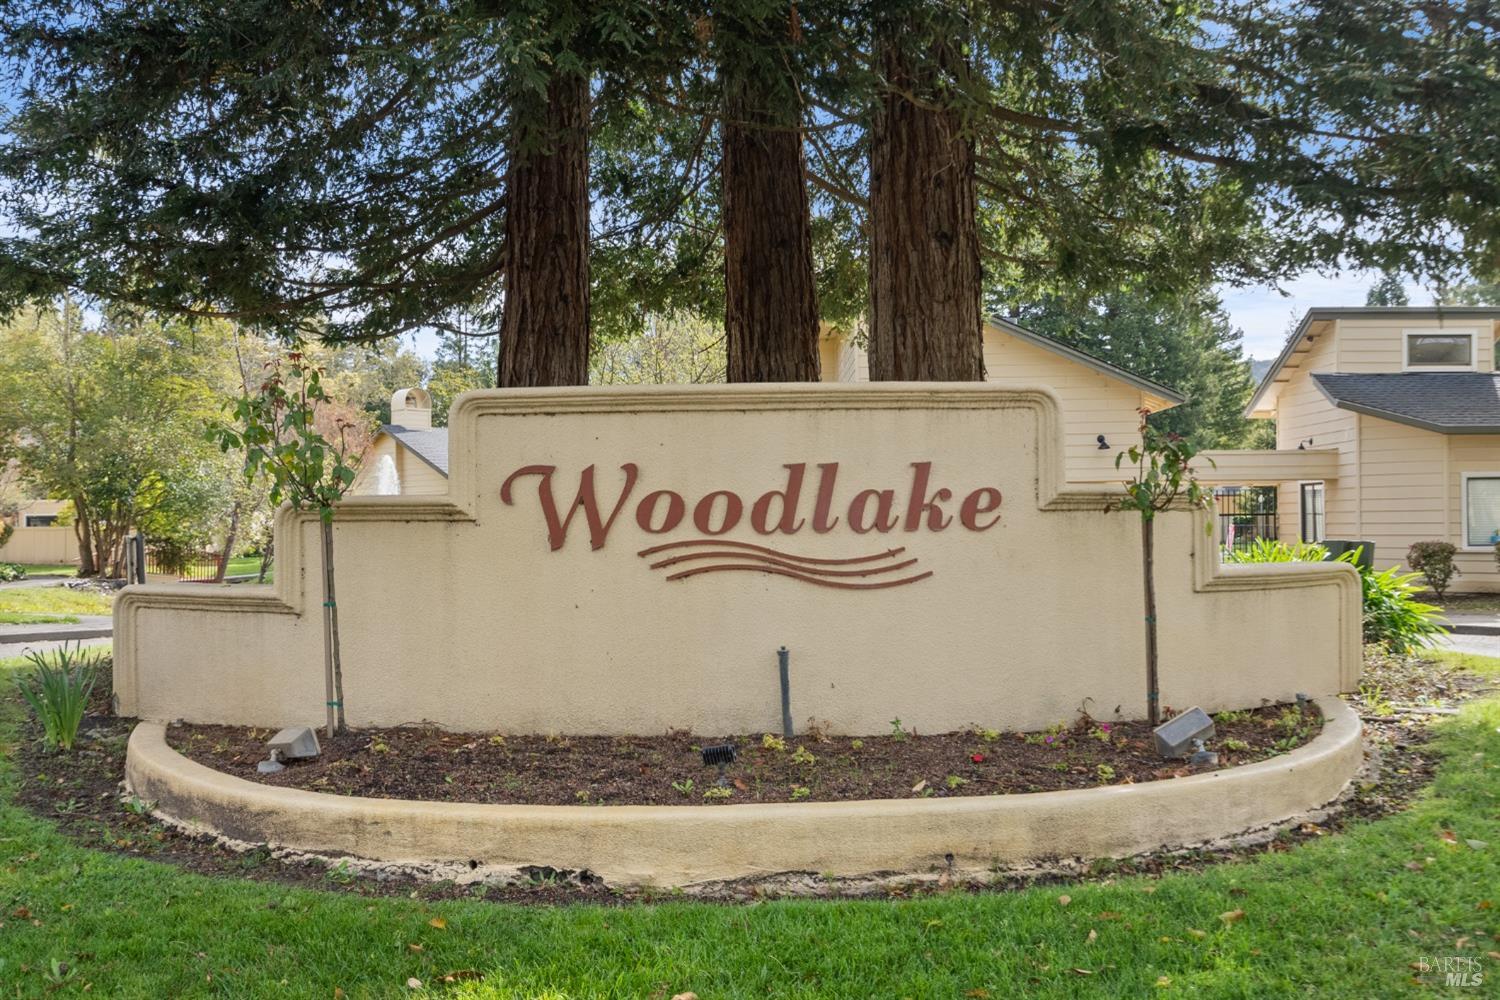 Photo of 2901 Woodlake Dr in Santa Rosa, CA